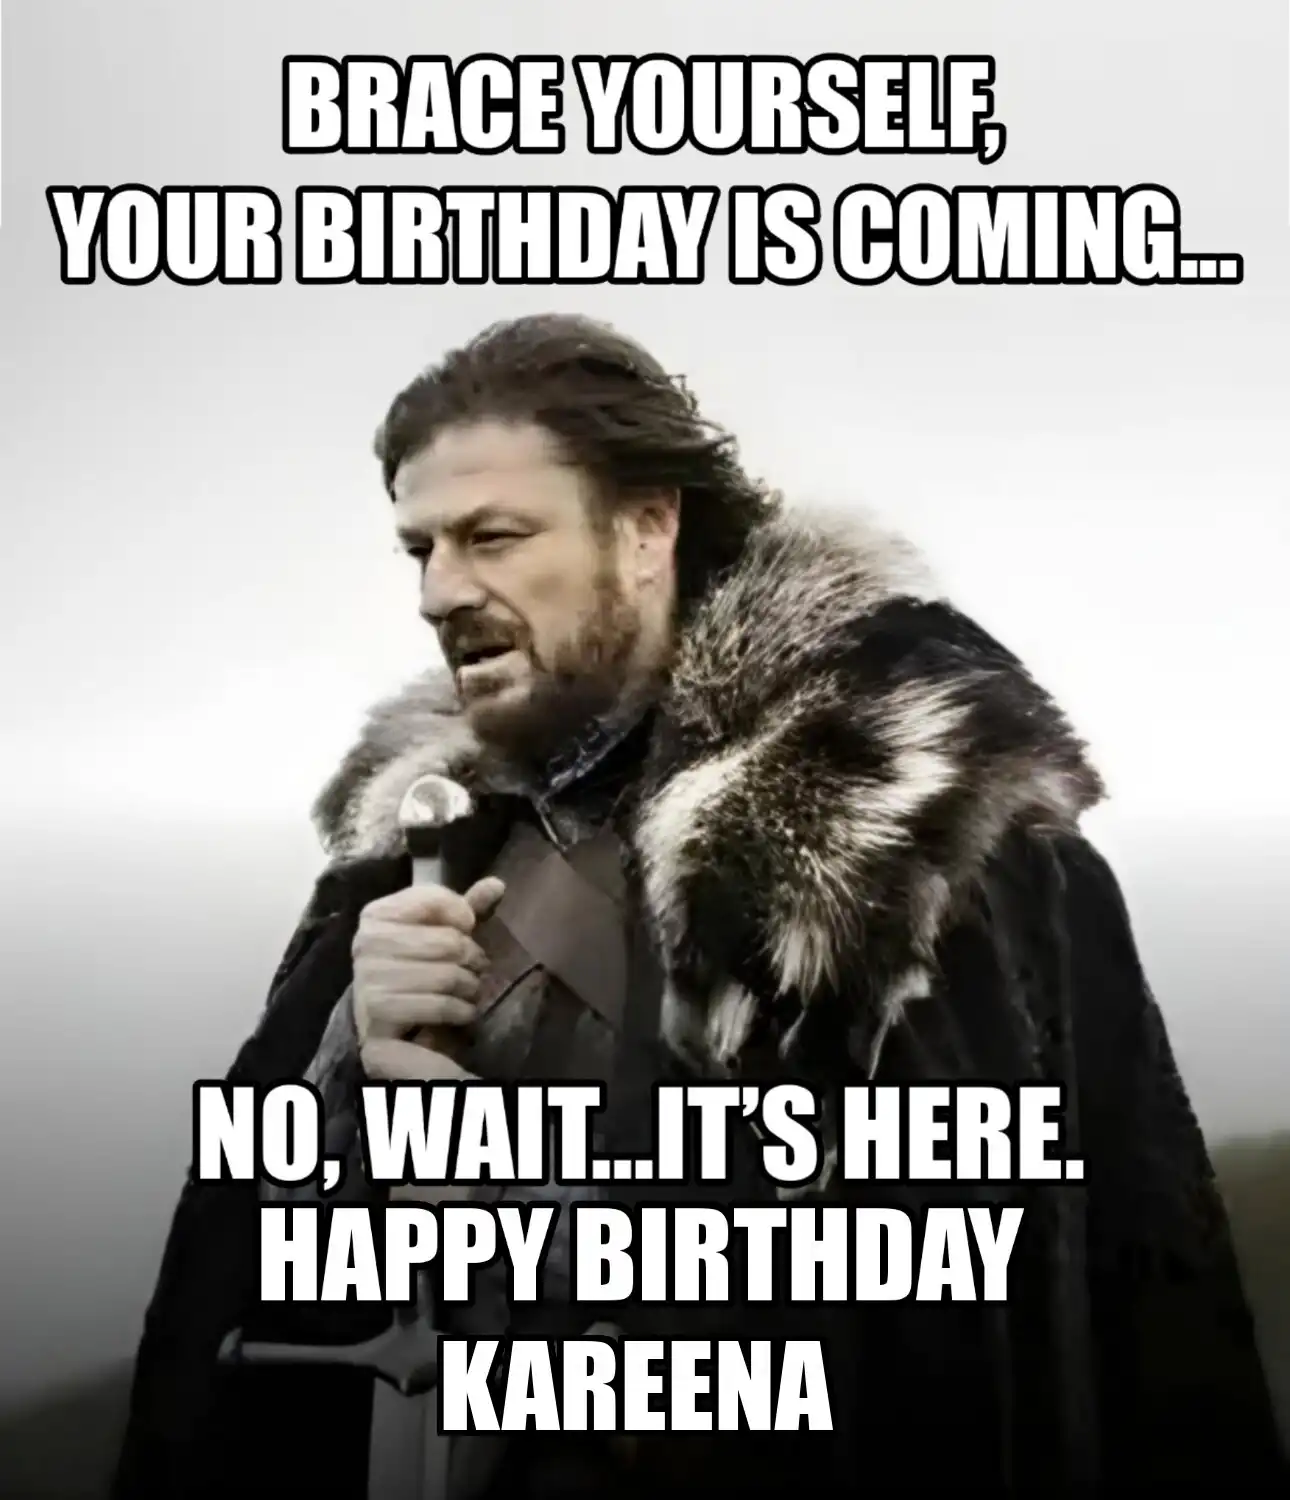 Happy Birthday Kareena Brace Yourself Your Birthday Is Coming Meme